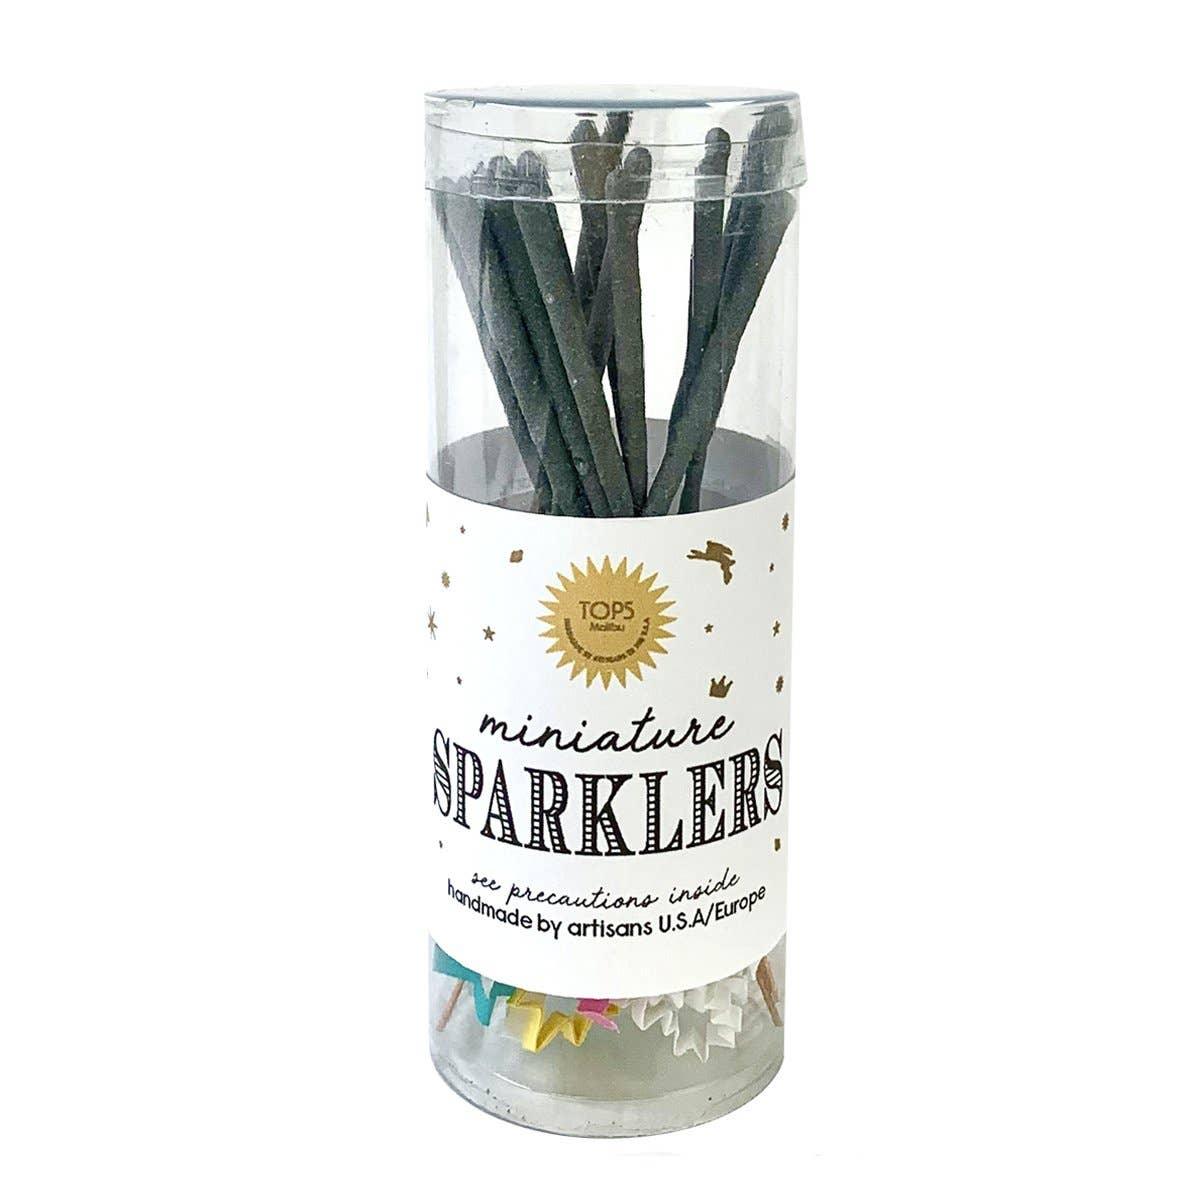 Mini Sparklers in Tube - The Silver Dahlia